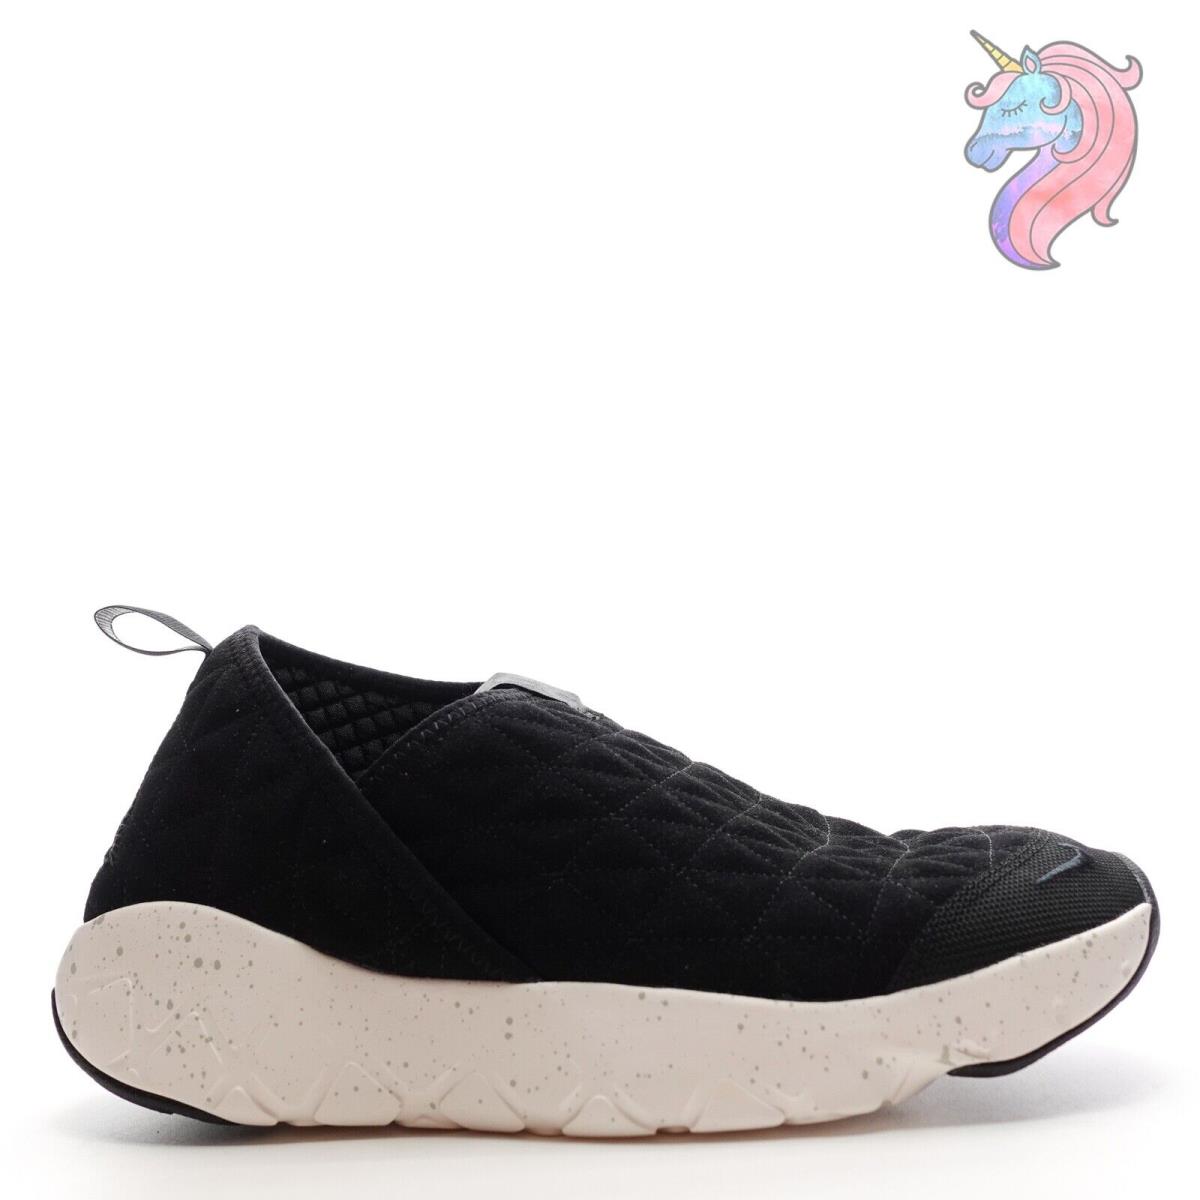 Nike Acg Moc 3.0 Leather Black Pull / Slip On Shoes CT2896 001 Mens Size 9.5